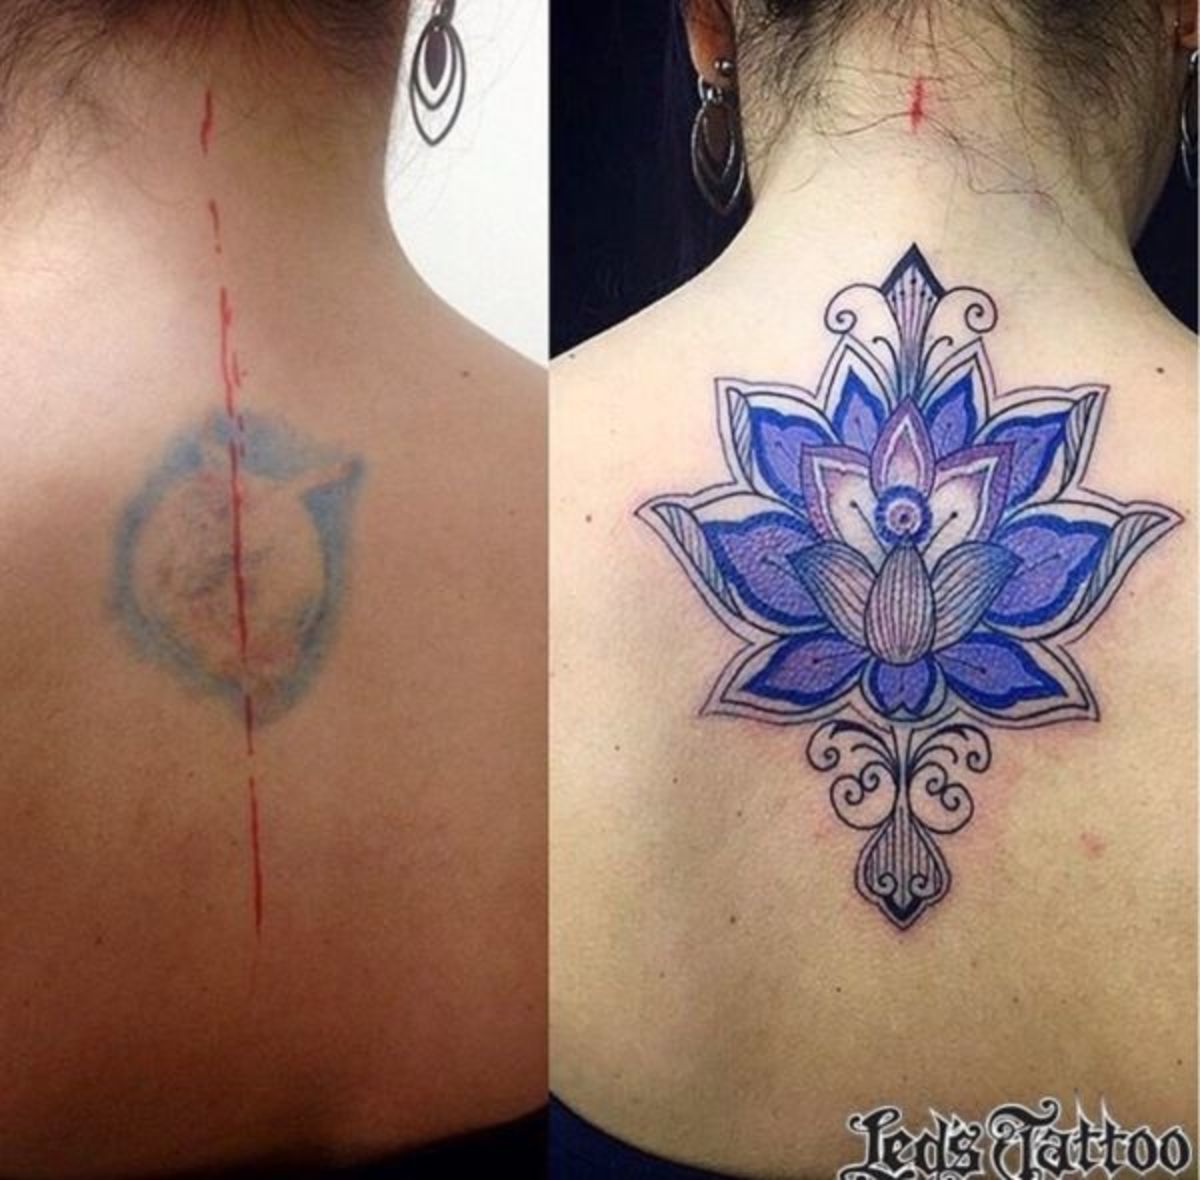 tatuointi-peite-led-tatuointi